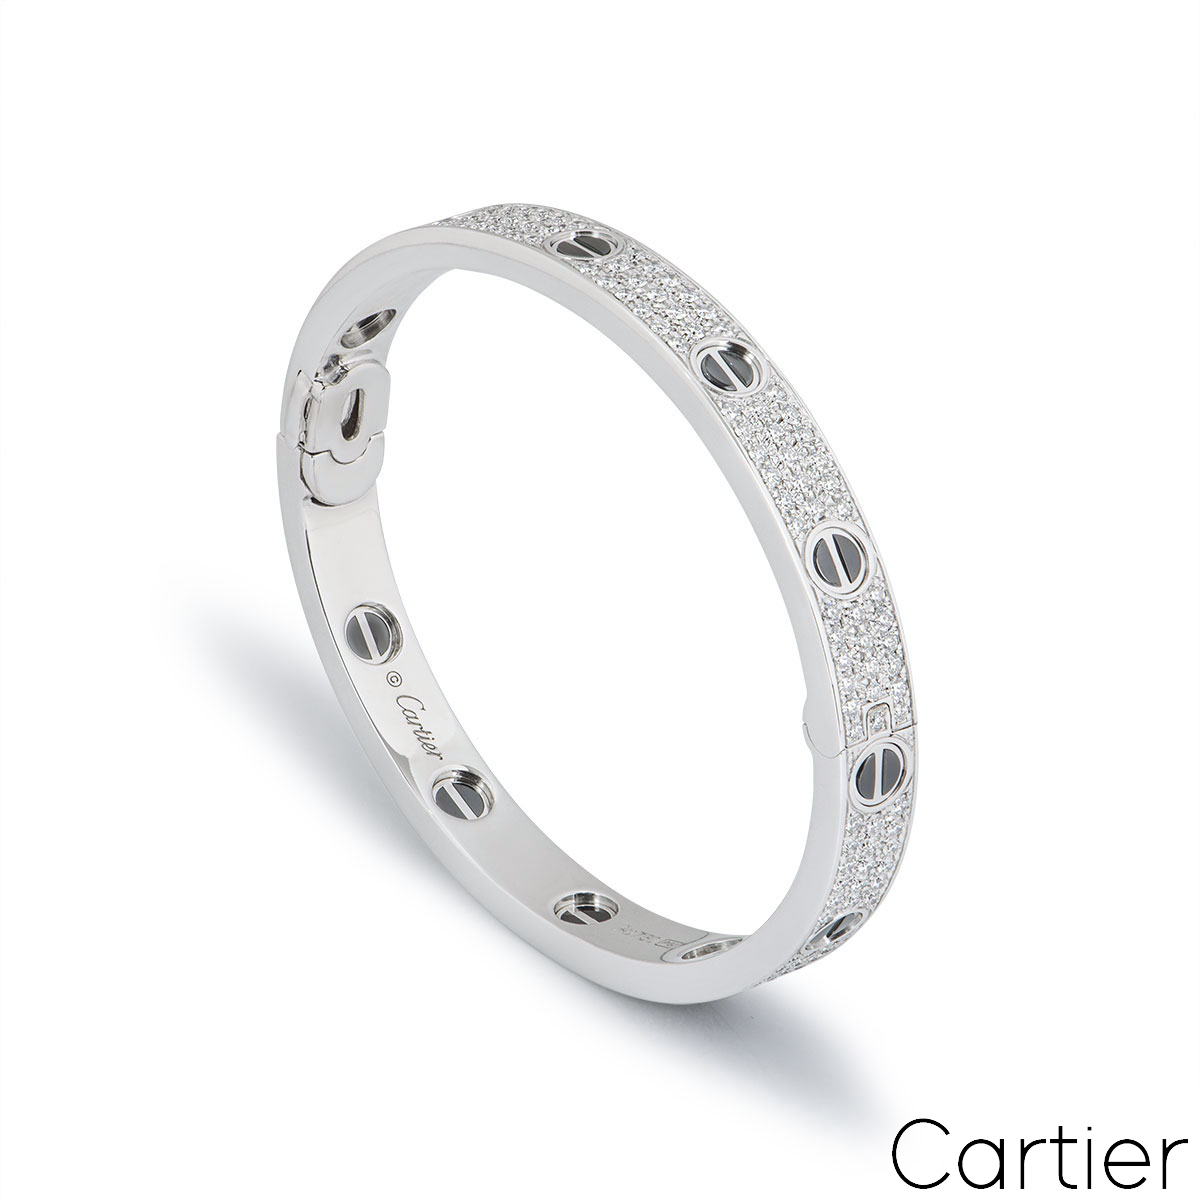 Cartier White Gold Pave Diamond & Ceramic Love Bracelet Size 18 N6032418